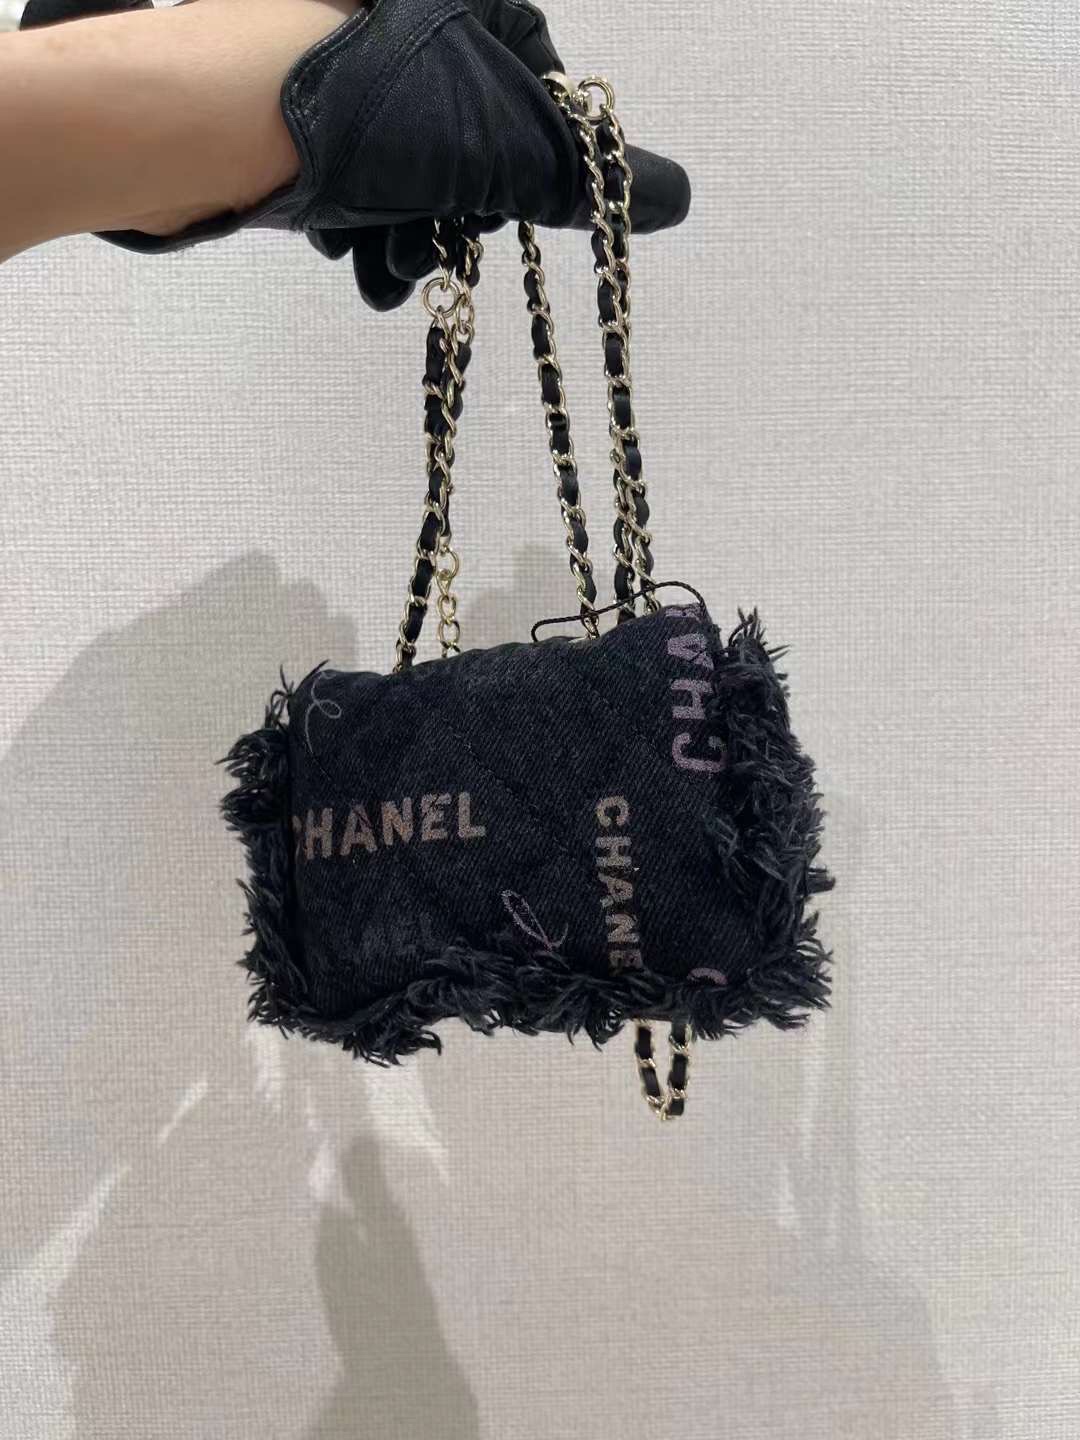 【P720】香奈儿新款女包 Chanel涂鸦牛仔布链条包单肩斜挎包 黑色